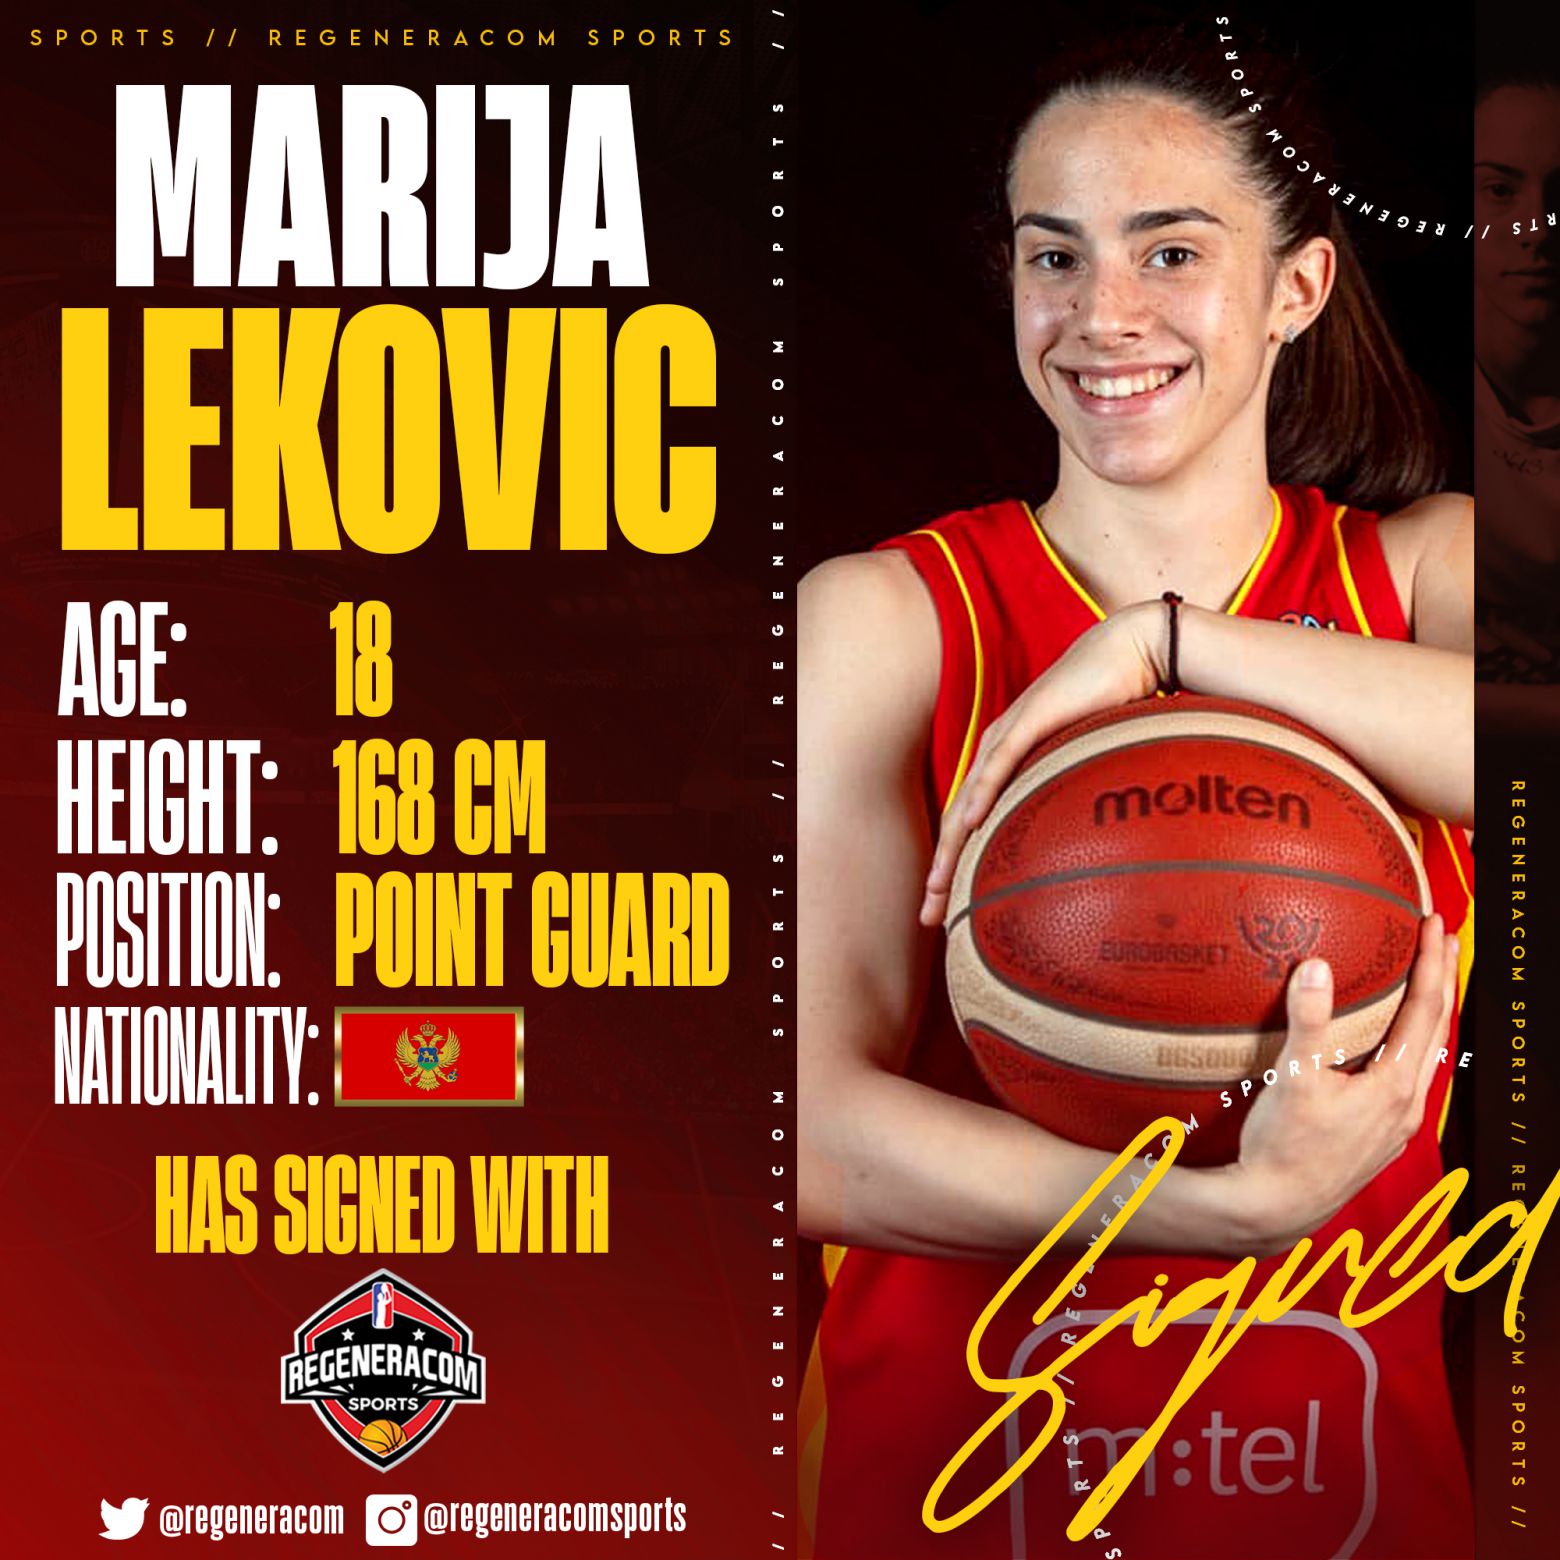 MARIJA LEKOVIC ha firmado con Regeneracom Sports